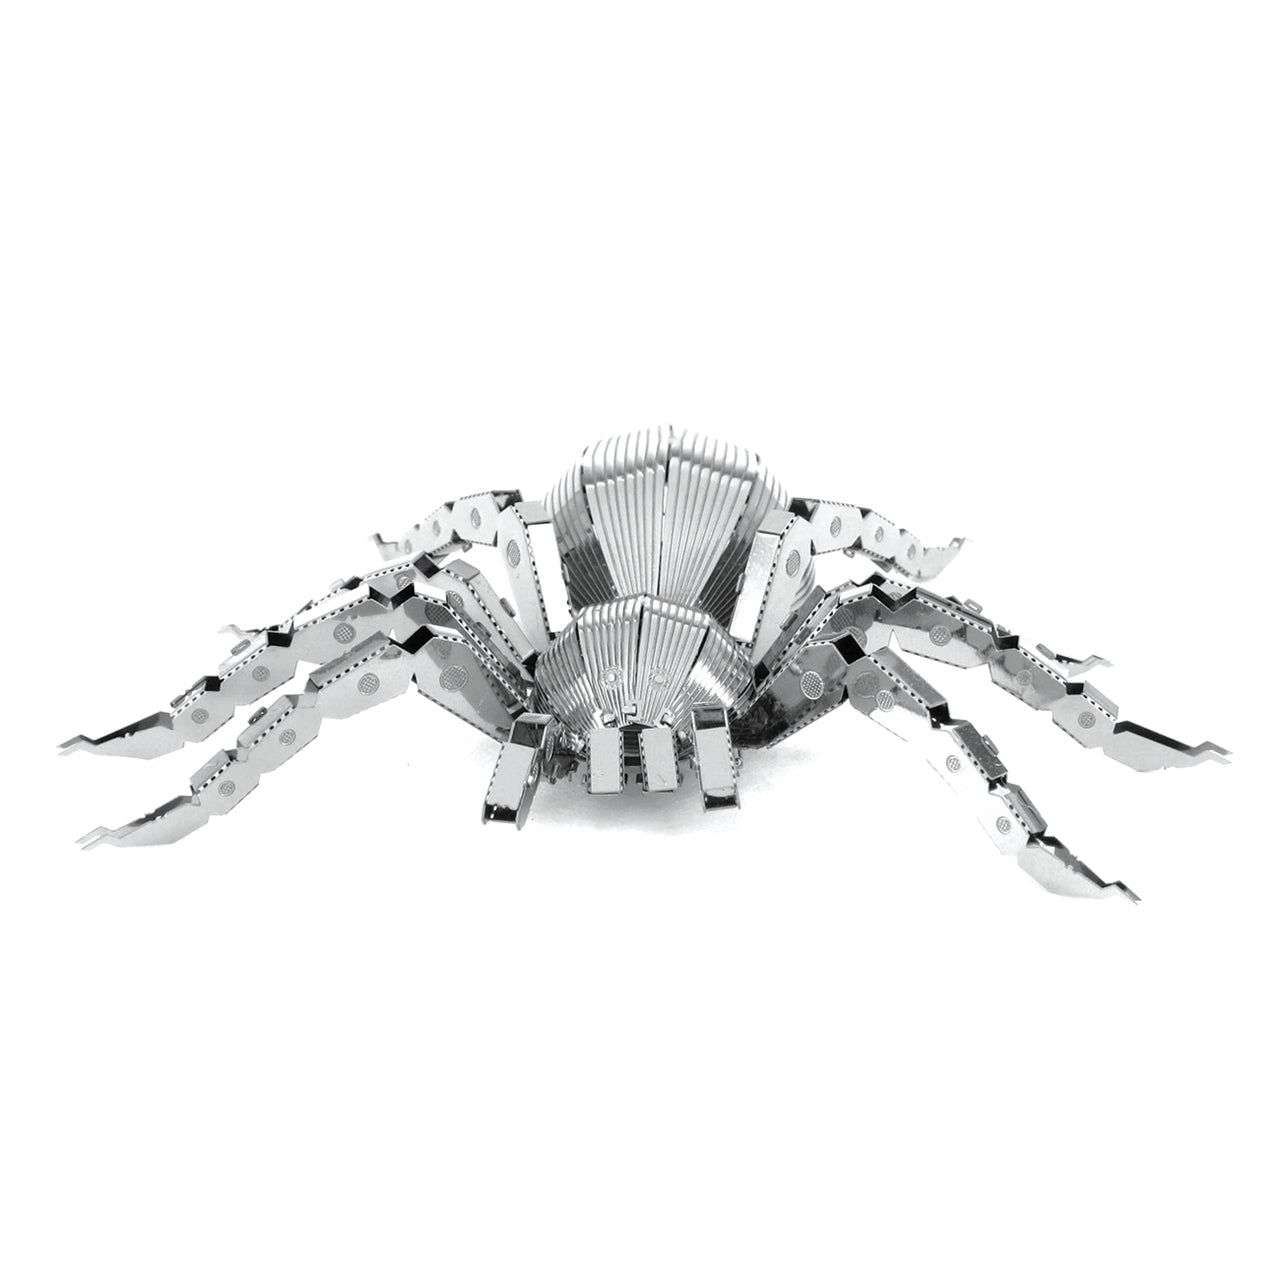 FMW072 Tarantula (Buildable) (Discontinued Model) 